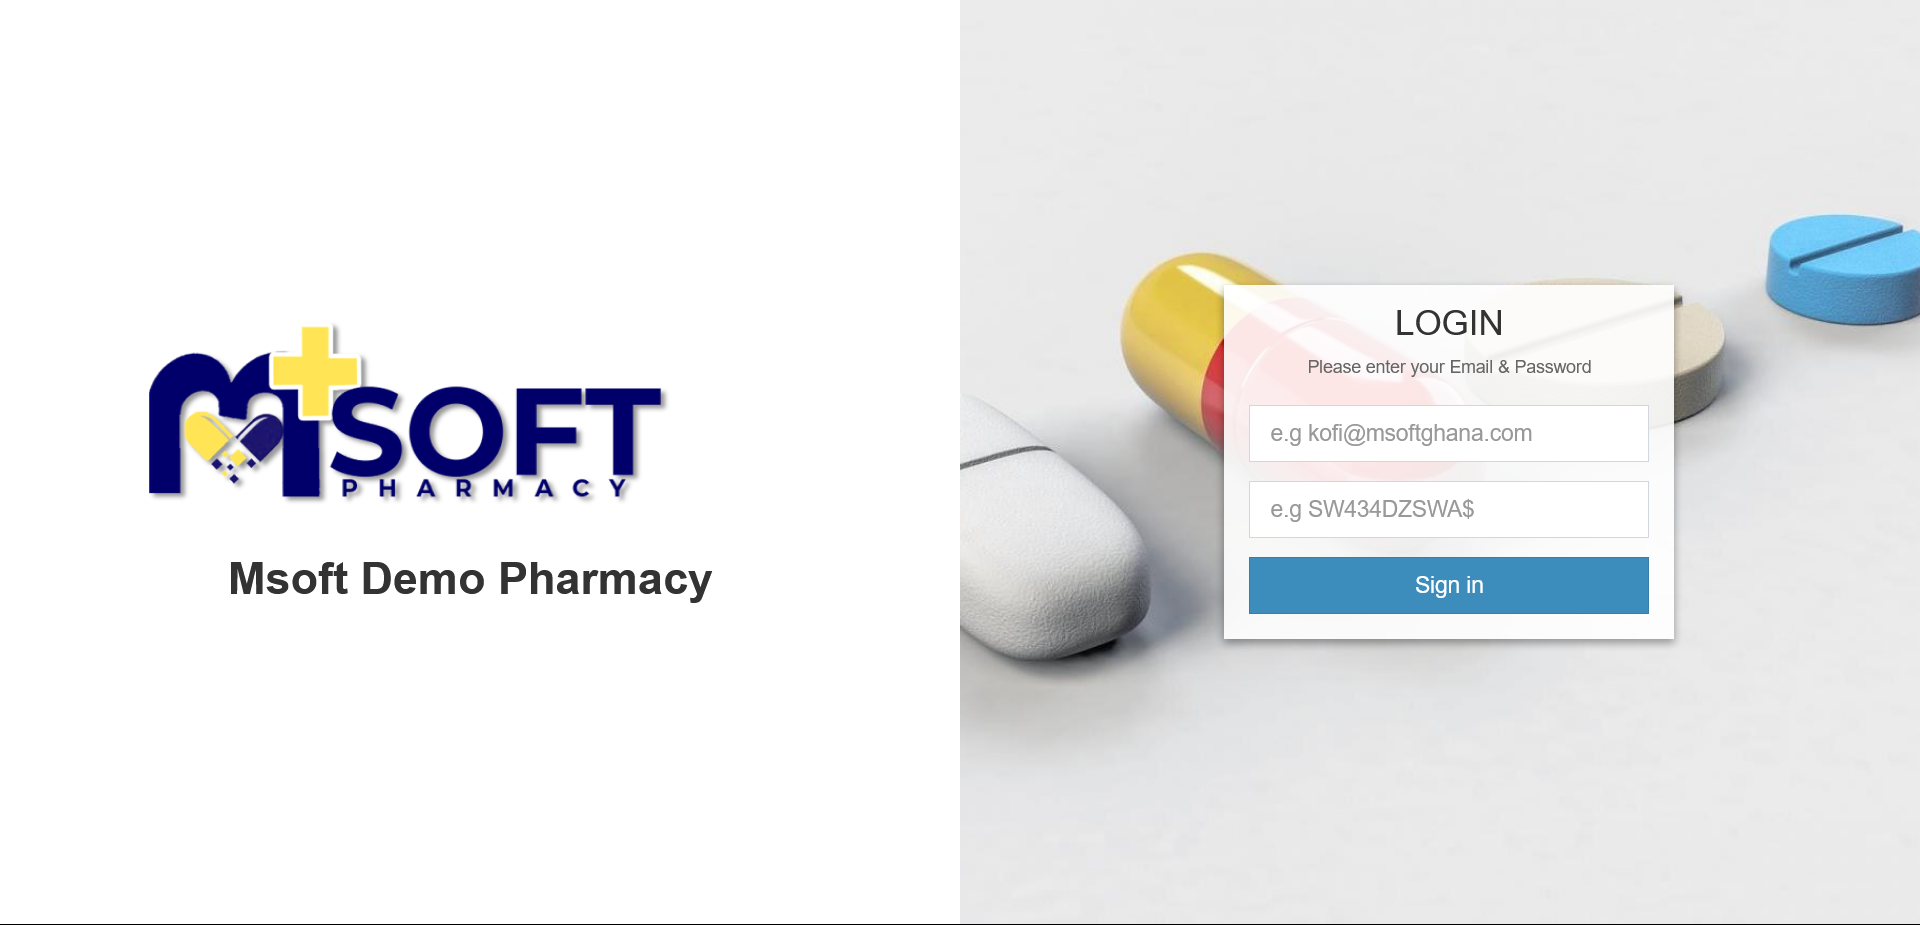 msoft pharmacy login page